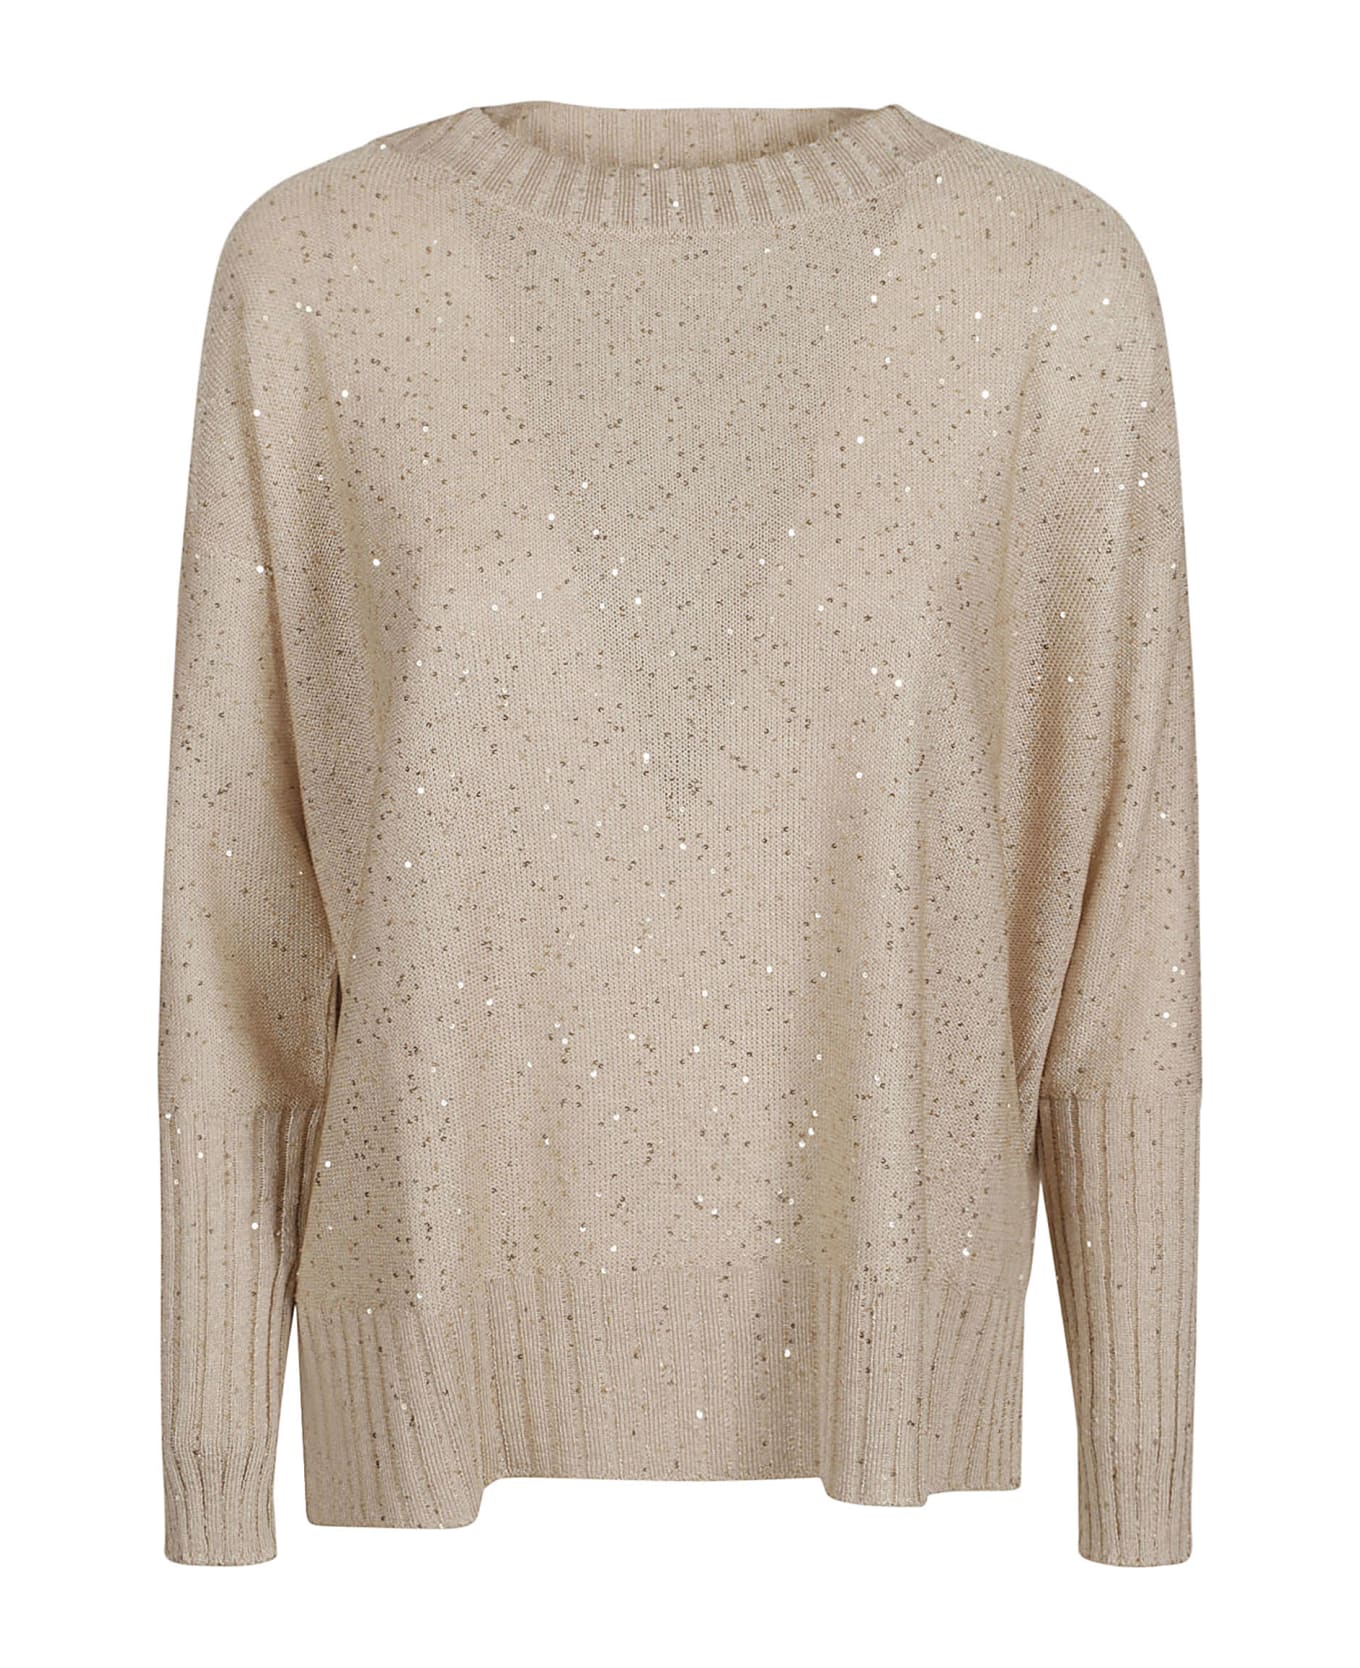 Lorena Antoniazzi Glittery Sweater - Light Beige